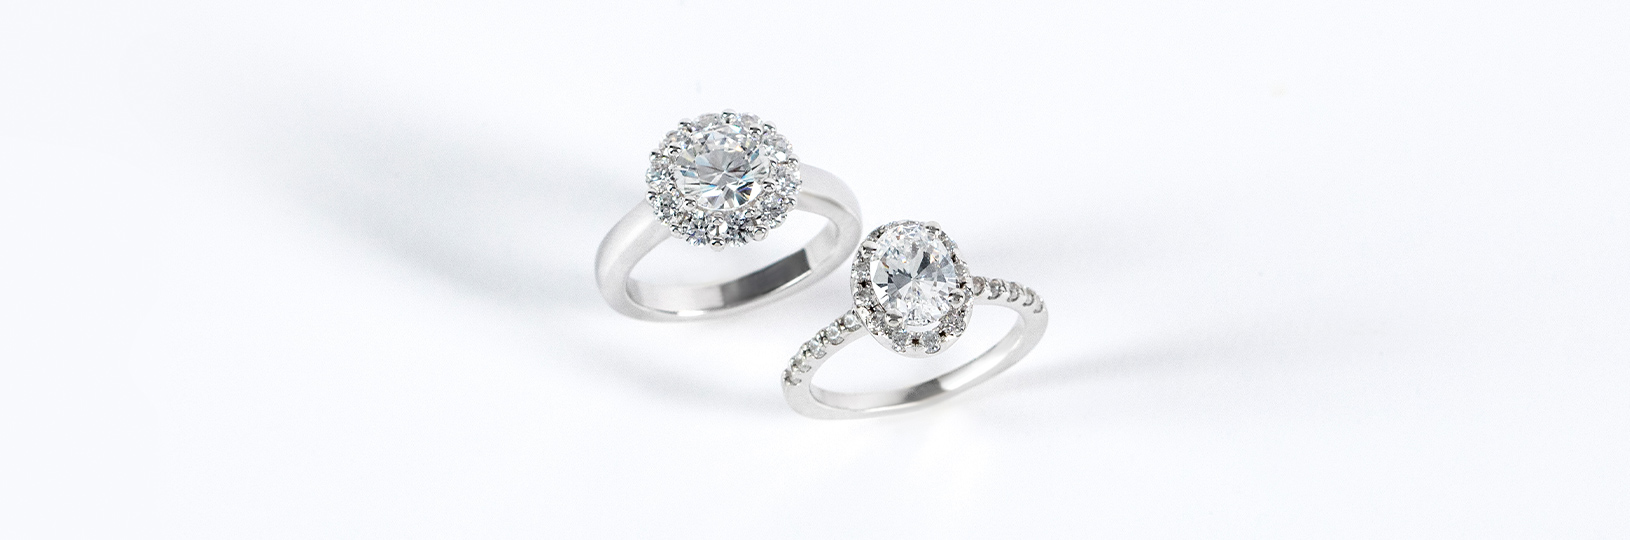 Simulated diamond engagement rings